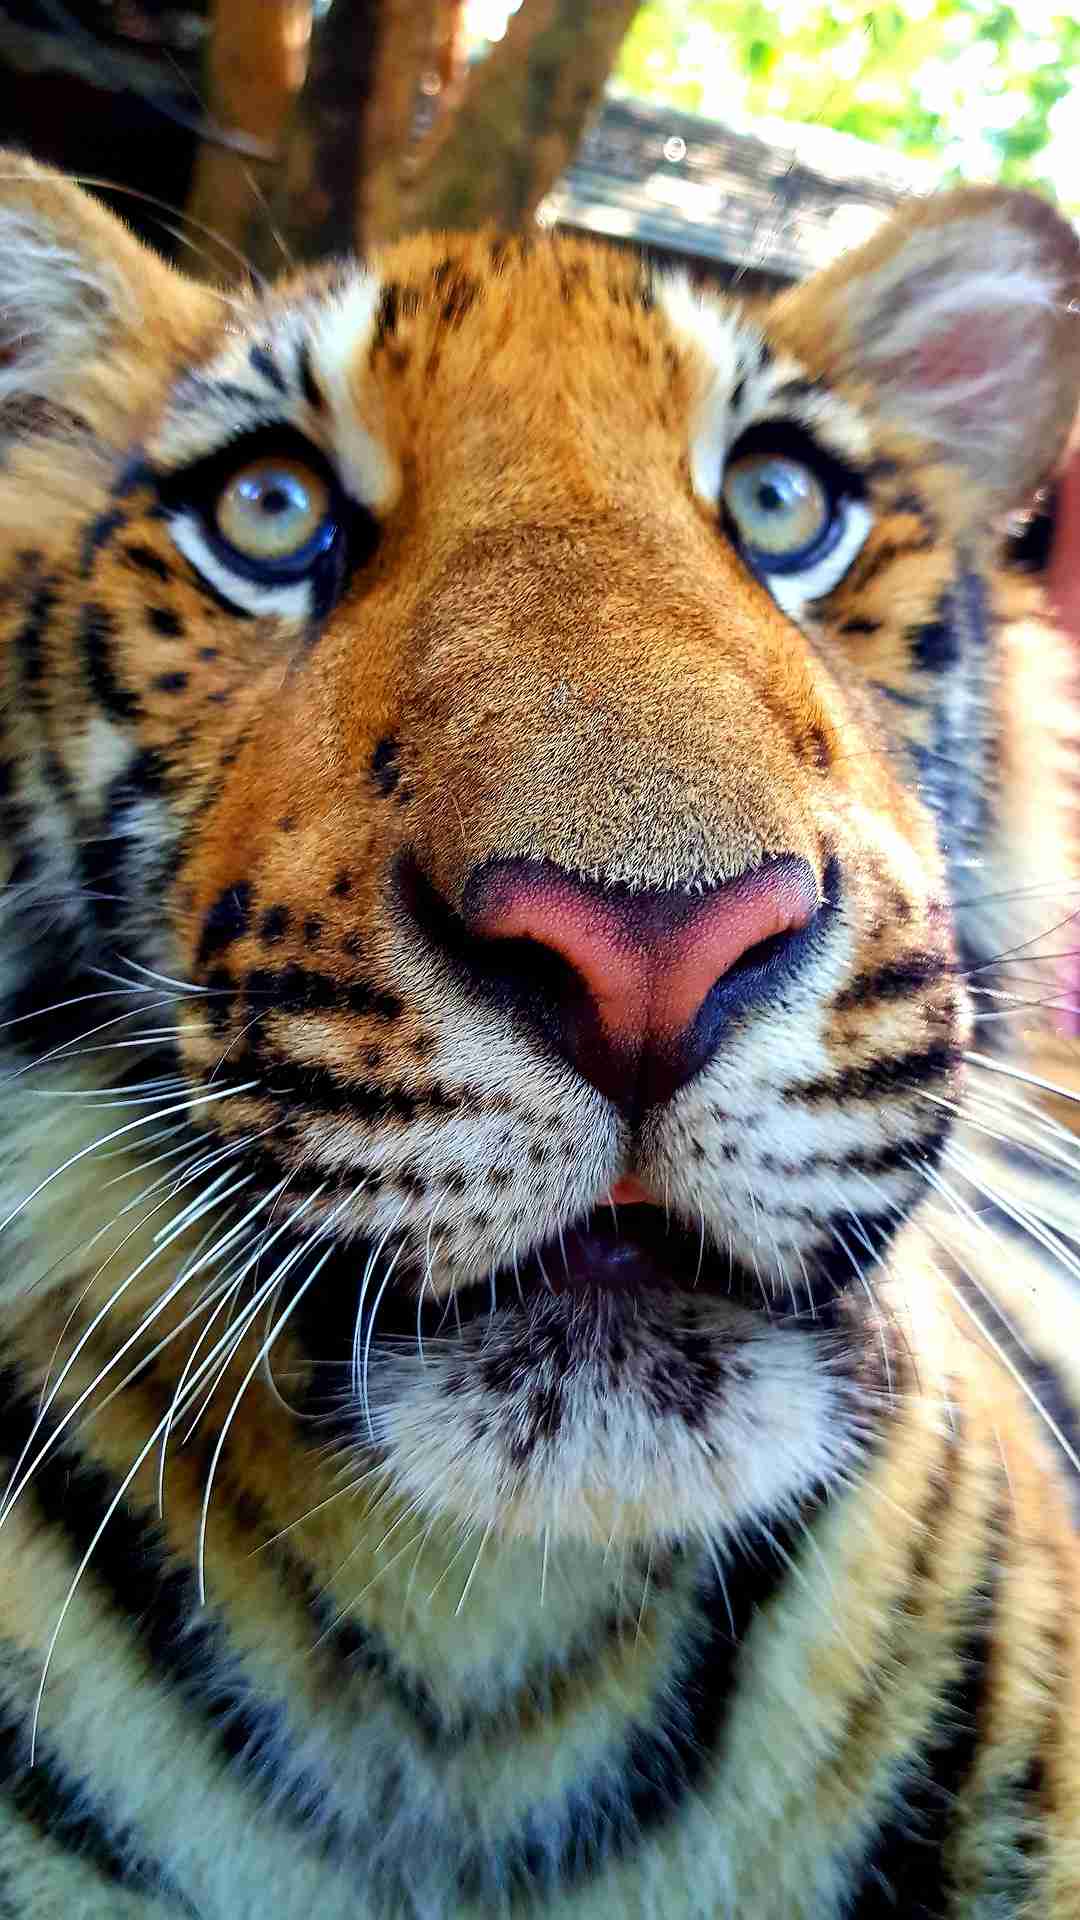 Tiger Kingdom, Thailand 2